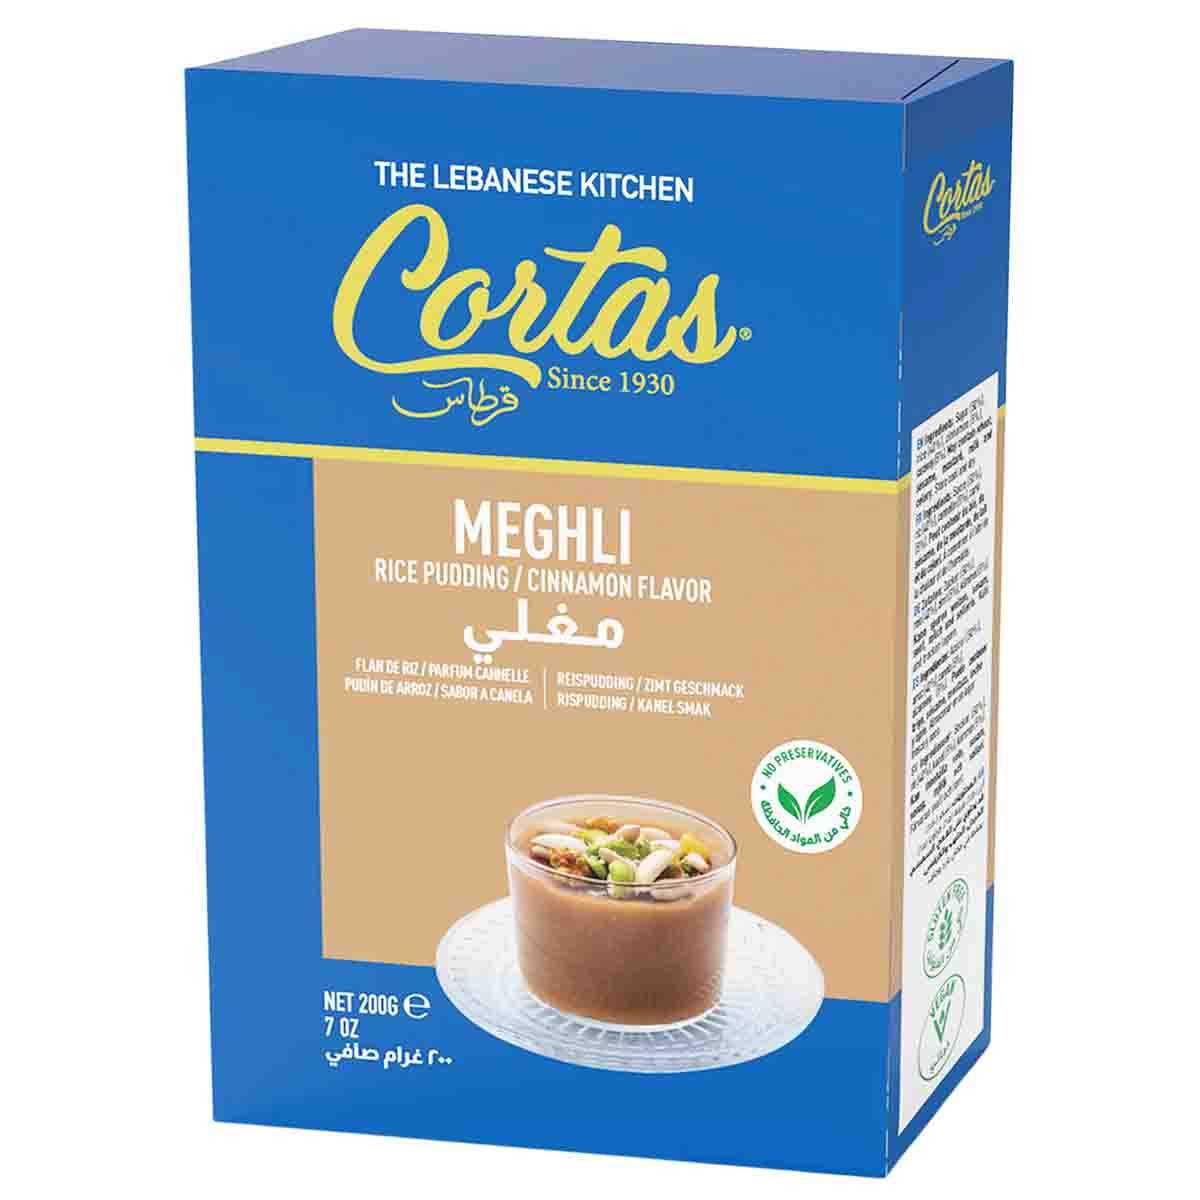 CORTAS Meghli - Rice Pudding / Cinnamon Flavor
7 oz. 